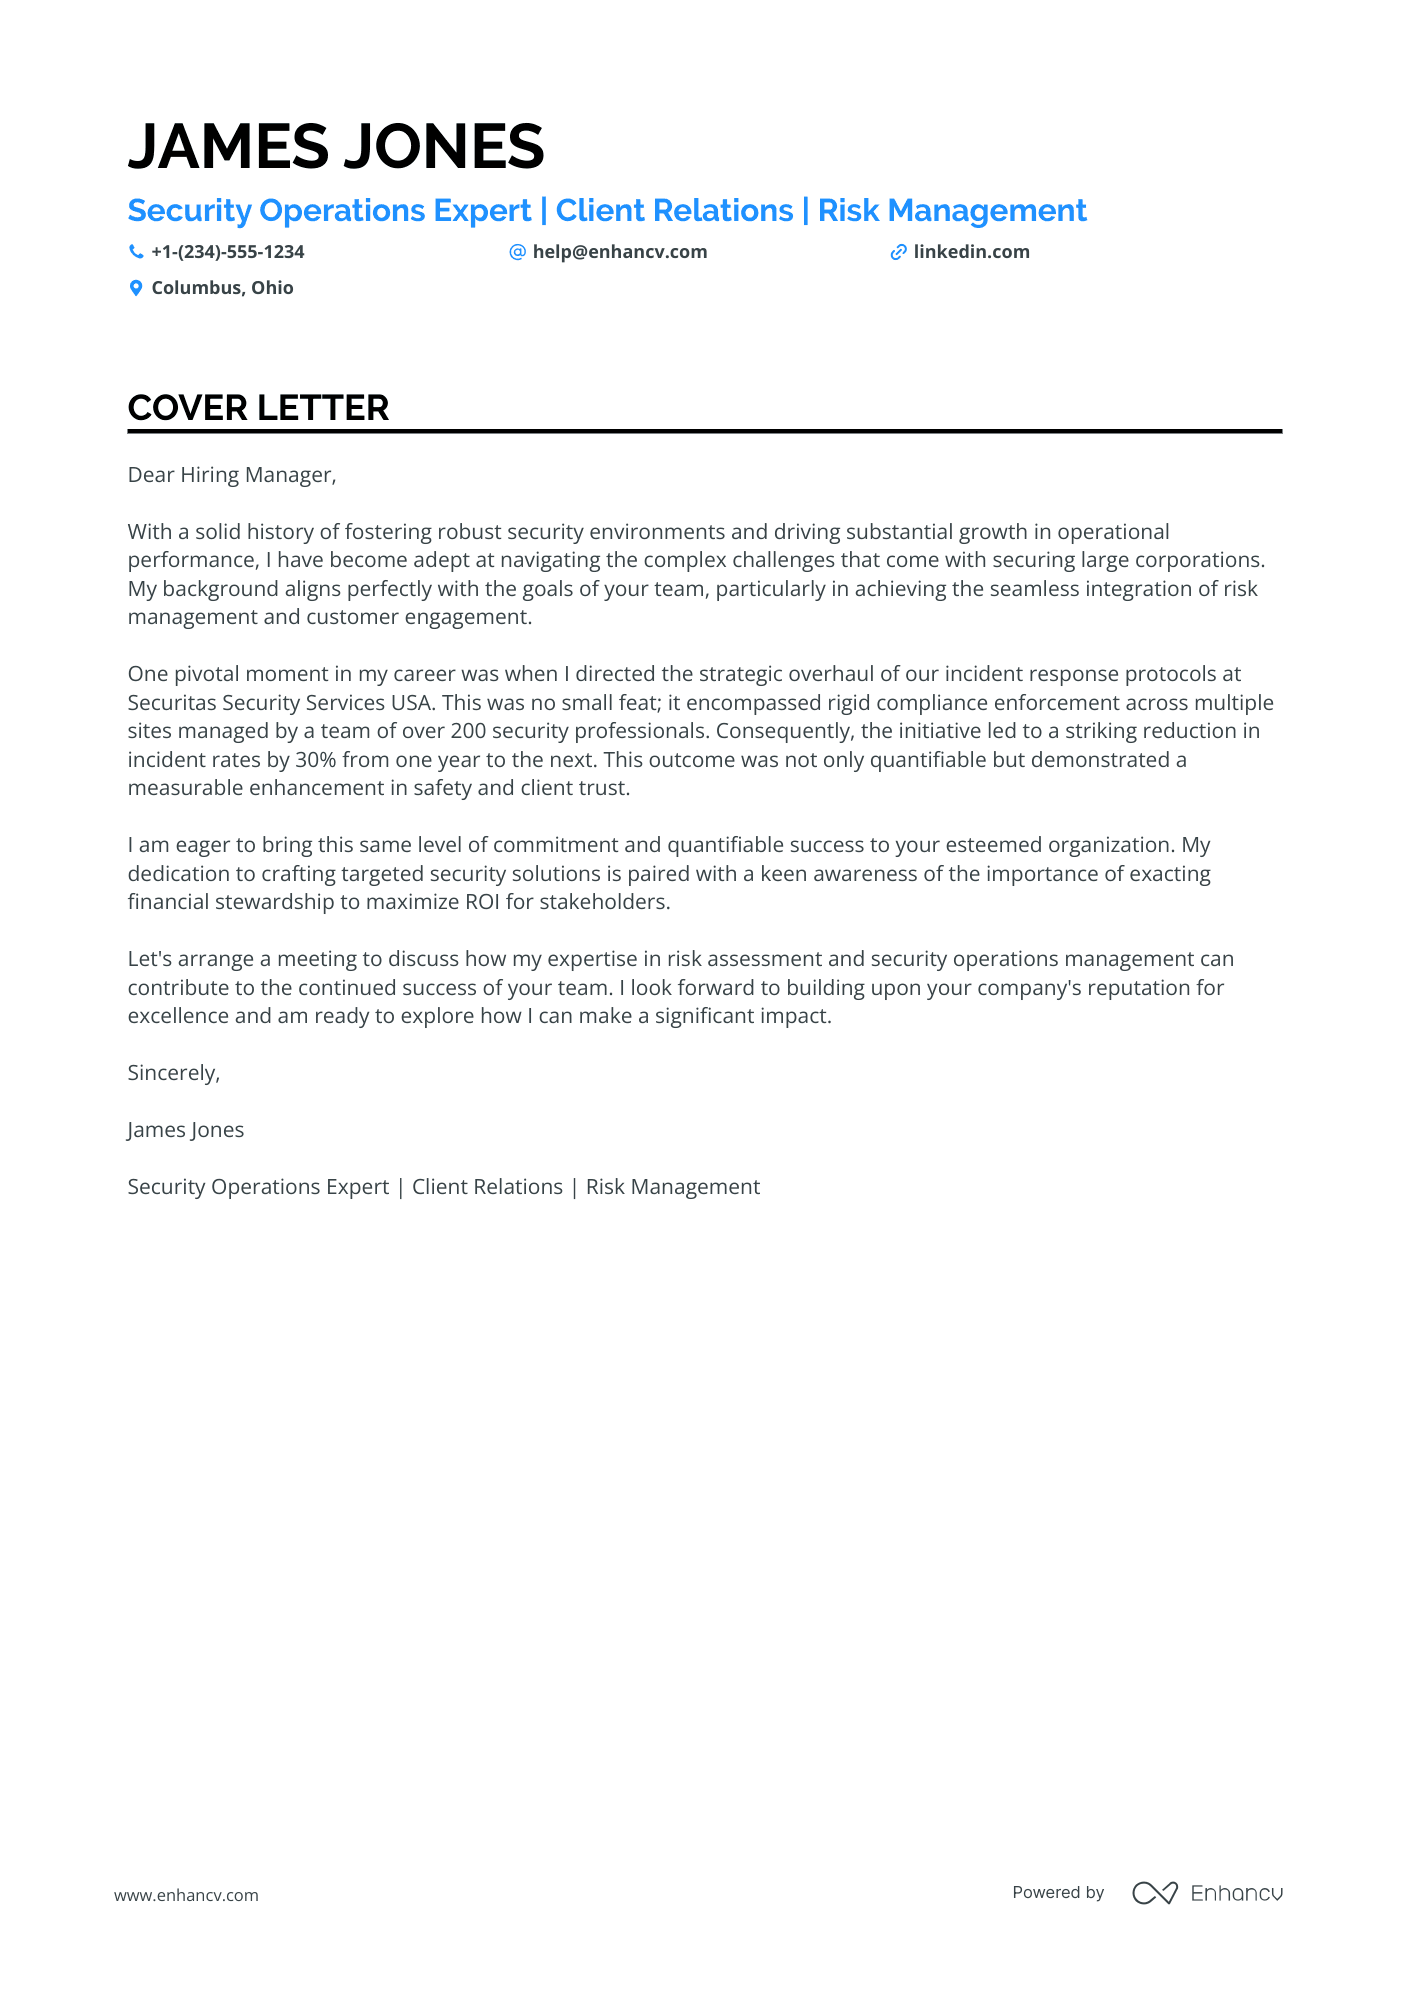 Portfolio Manager cover letter